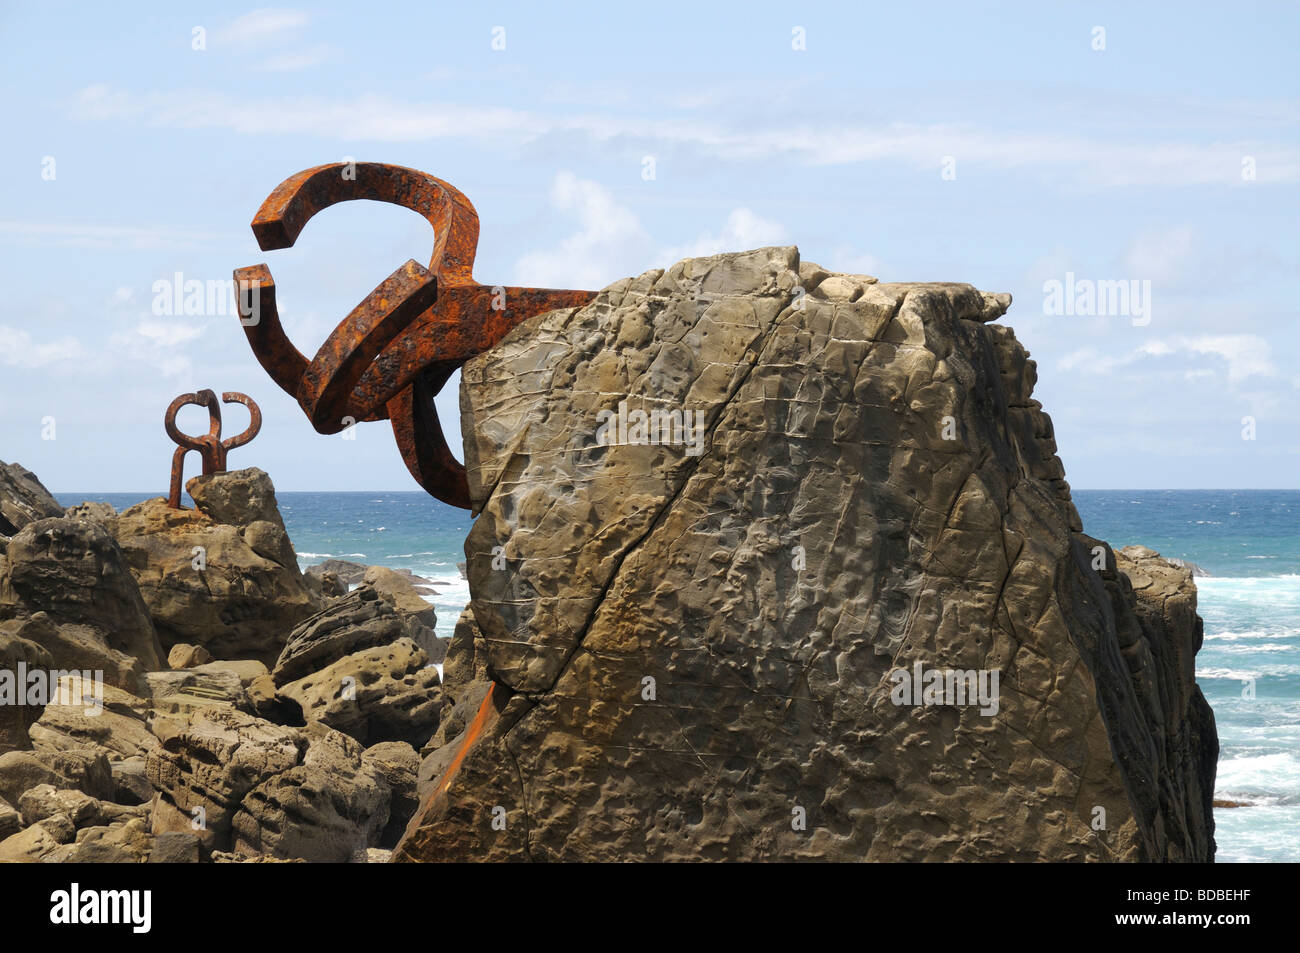 'Peine De Los Vientos' ('Wind Comb') sculpture by Eduardo Chillida, San Sebastian, Spain Stock Photo